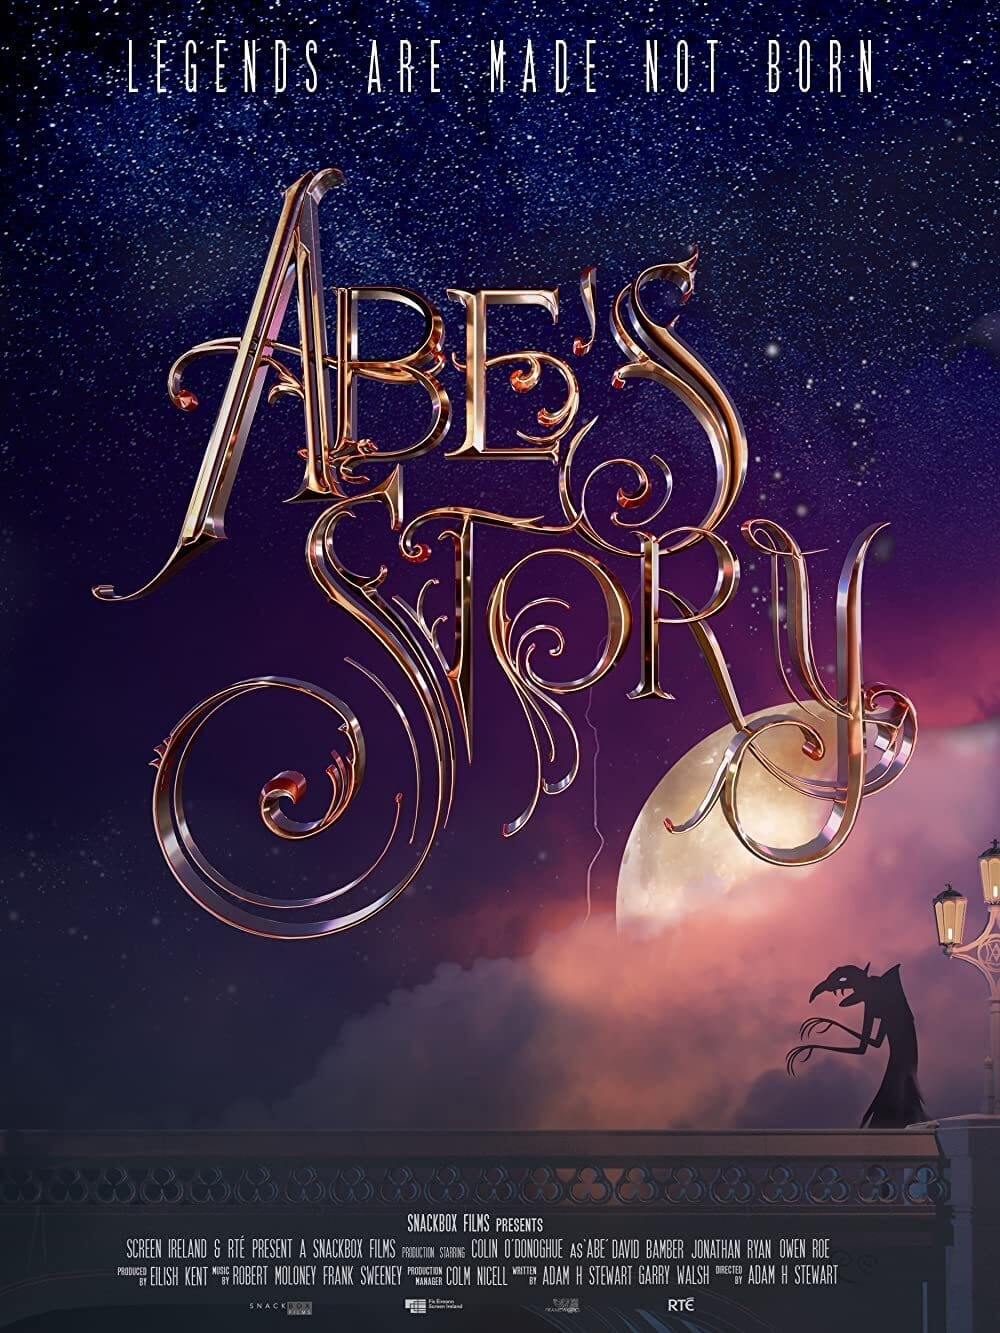 Caratula de ABE S STORY (Abe s Story) 